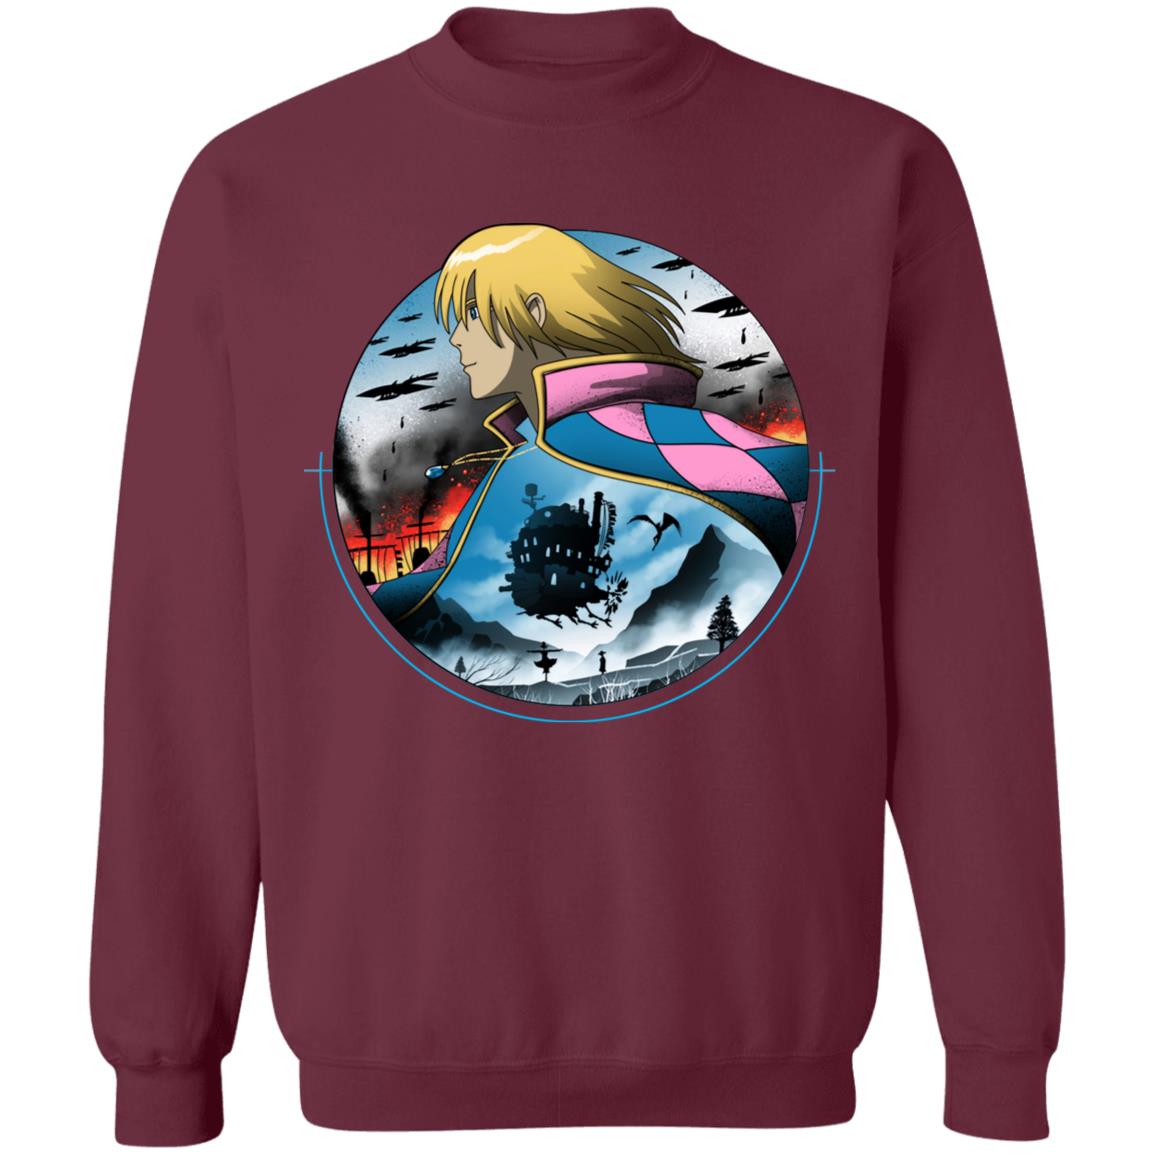 Howl’s Moving Castle – The Journey Sweatshirt